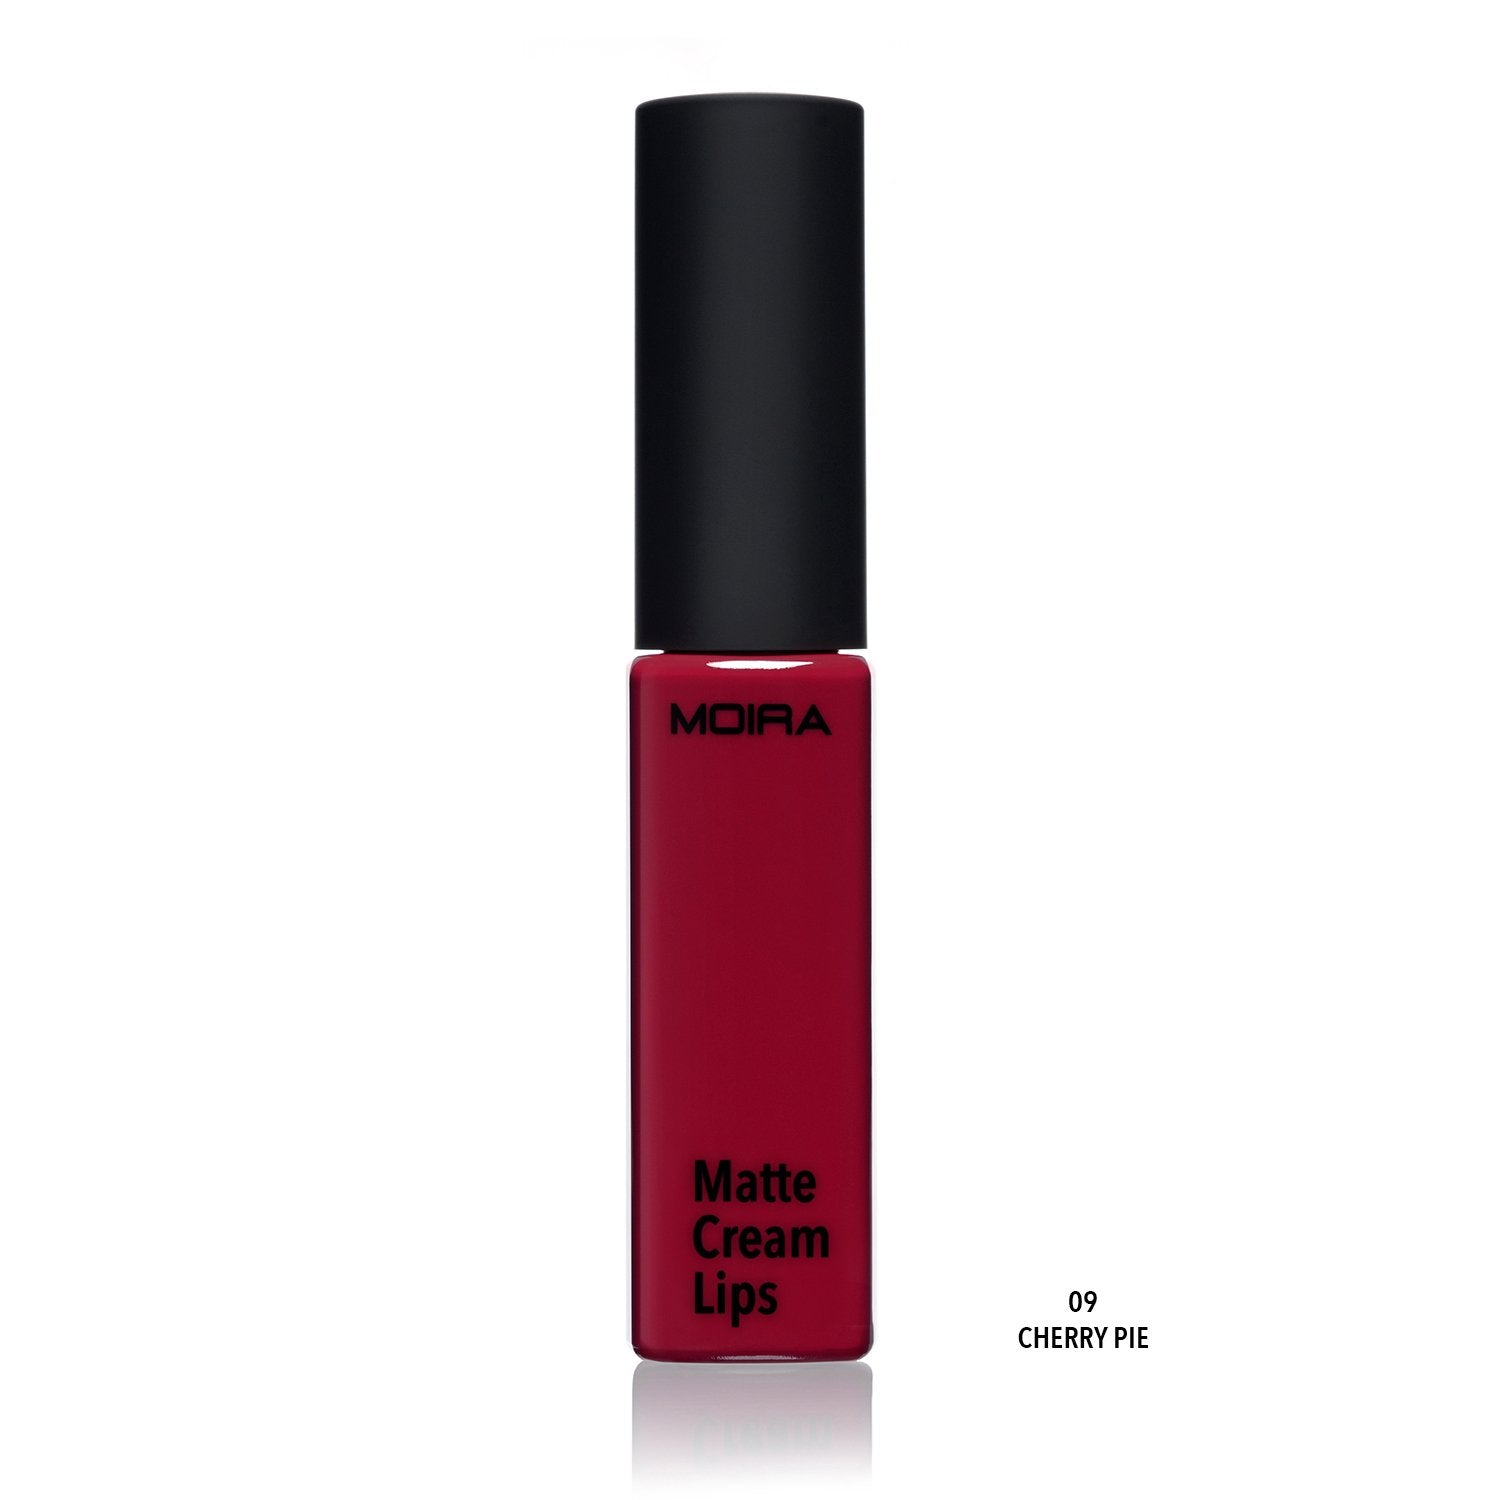 Matte Cream Lips (009, Cherry Pie)